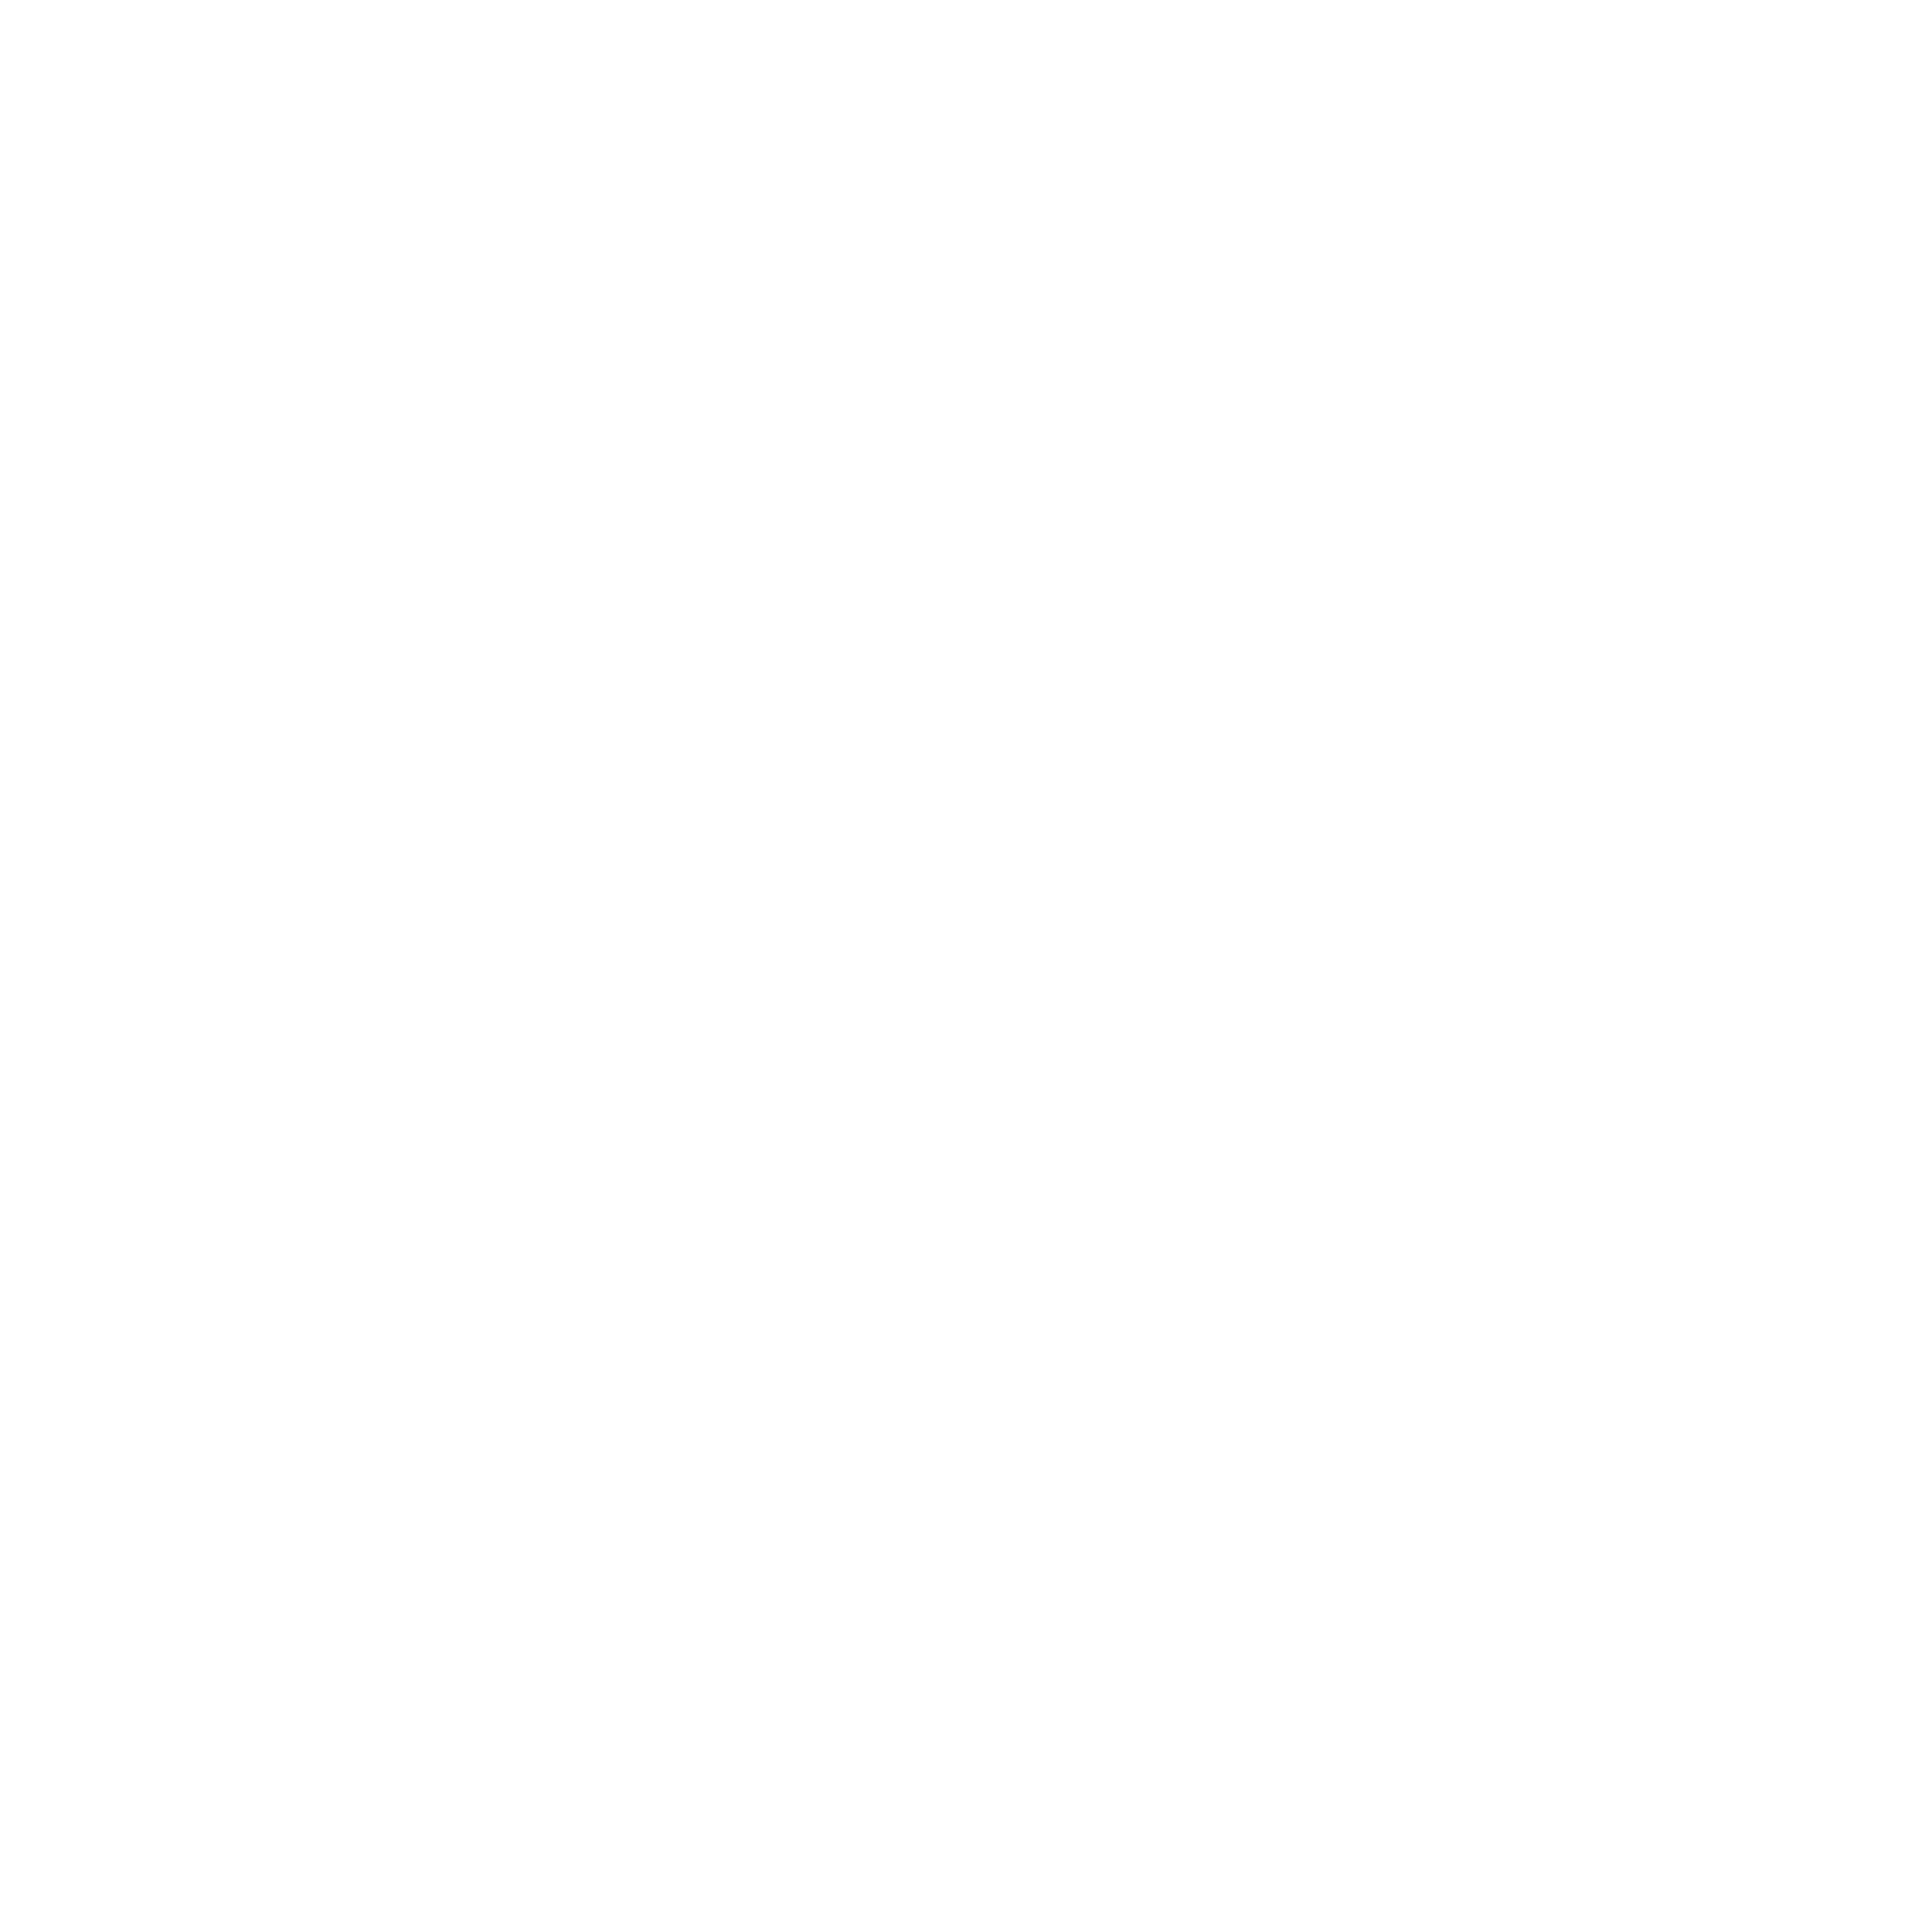 OTBox